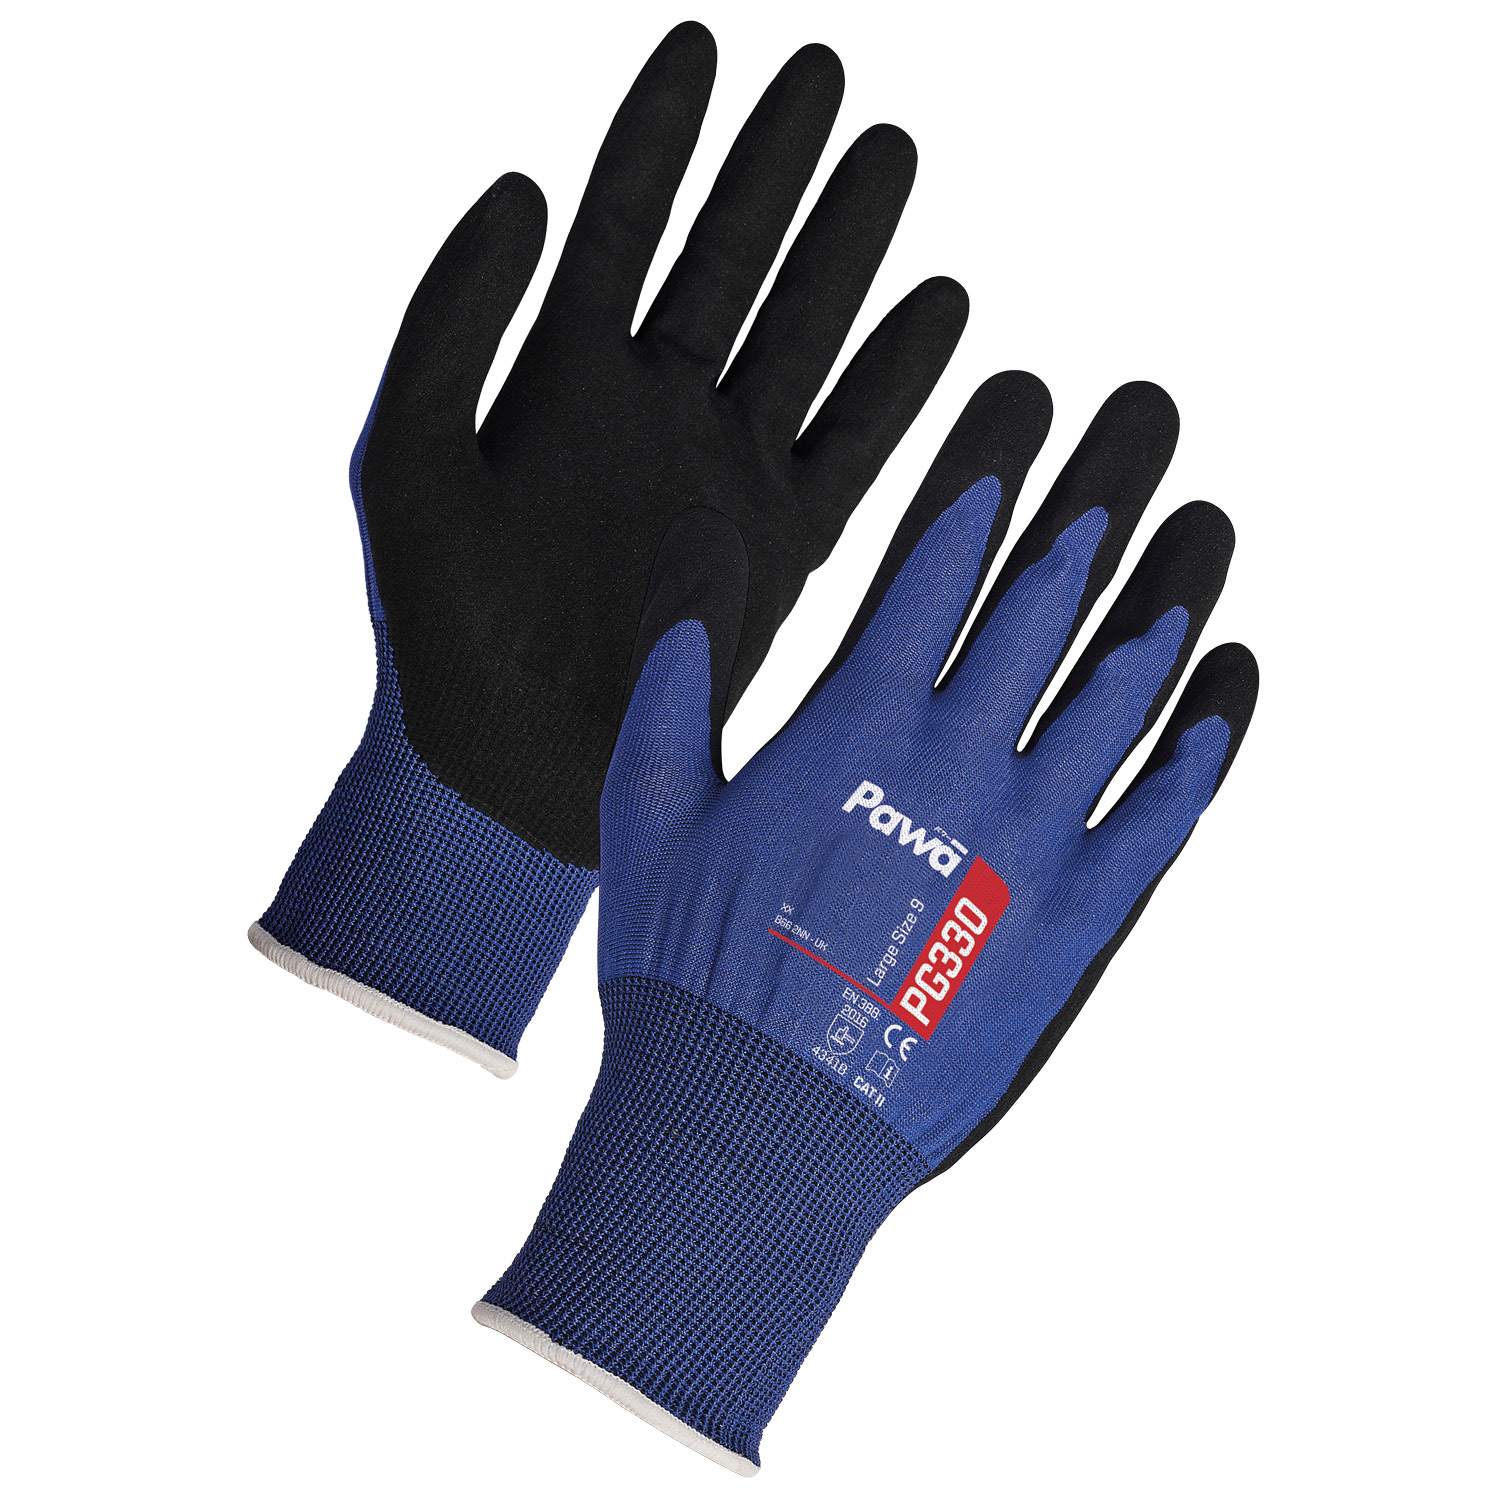 Pawa PG330 Ultra Thin Cut Resistant Glove Medium